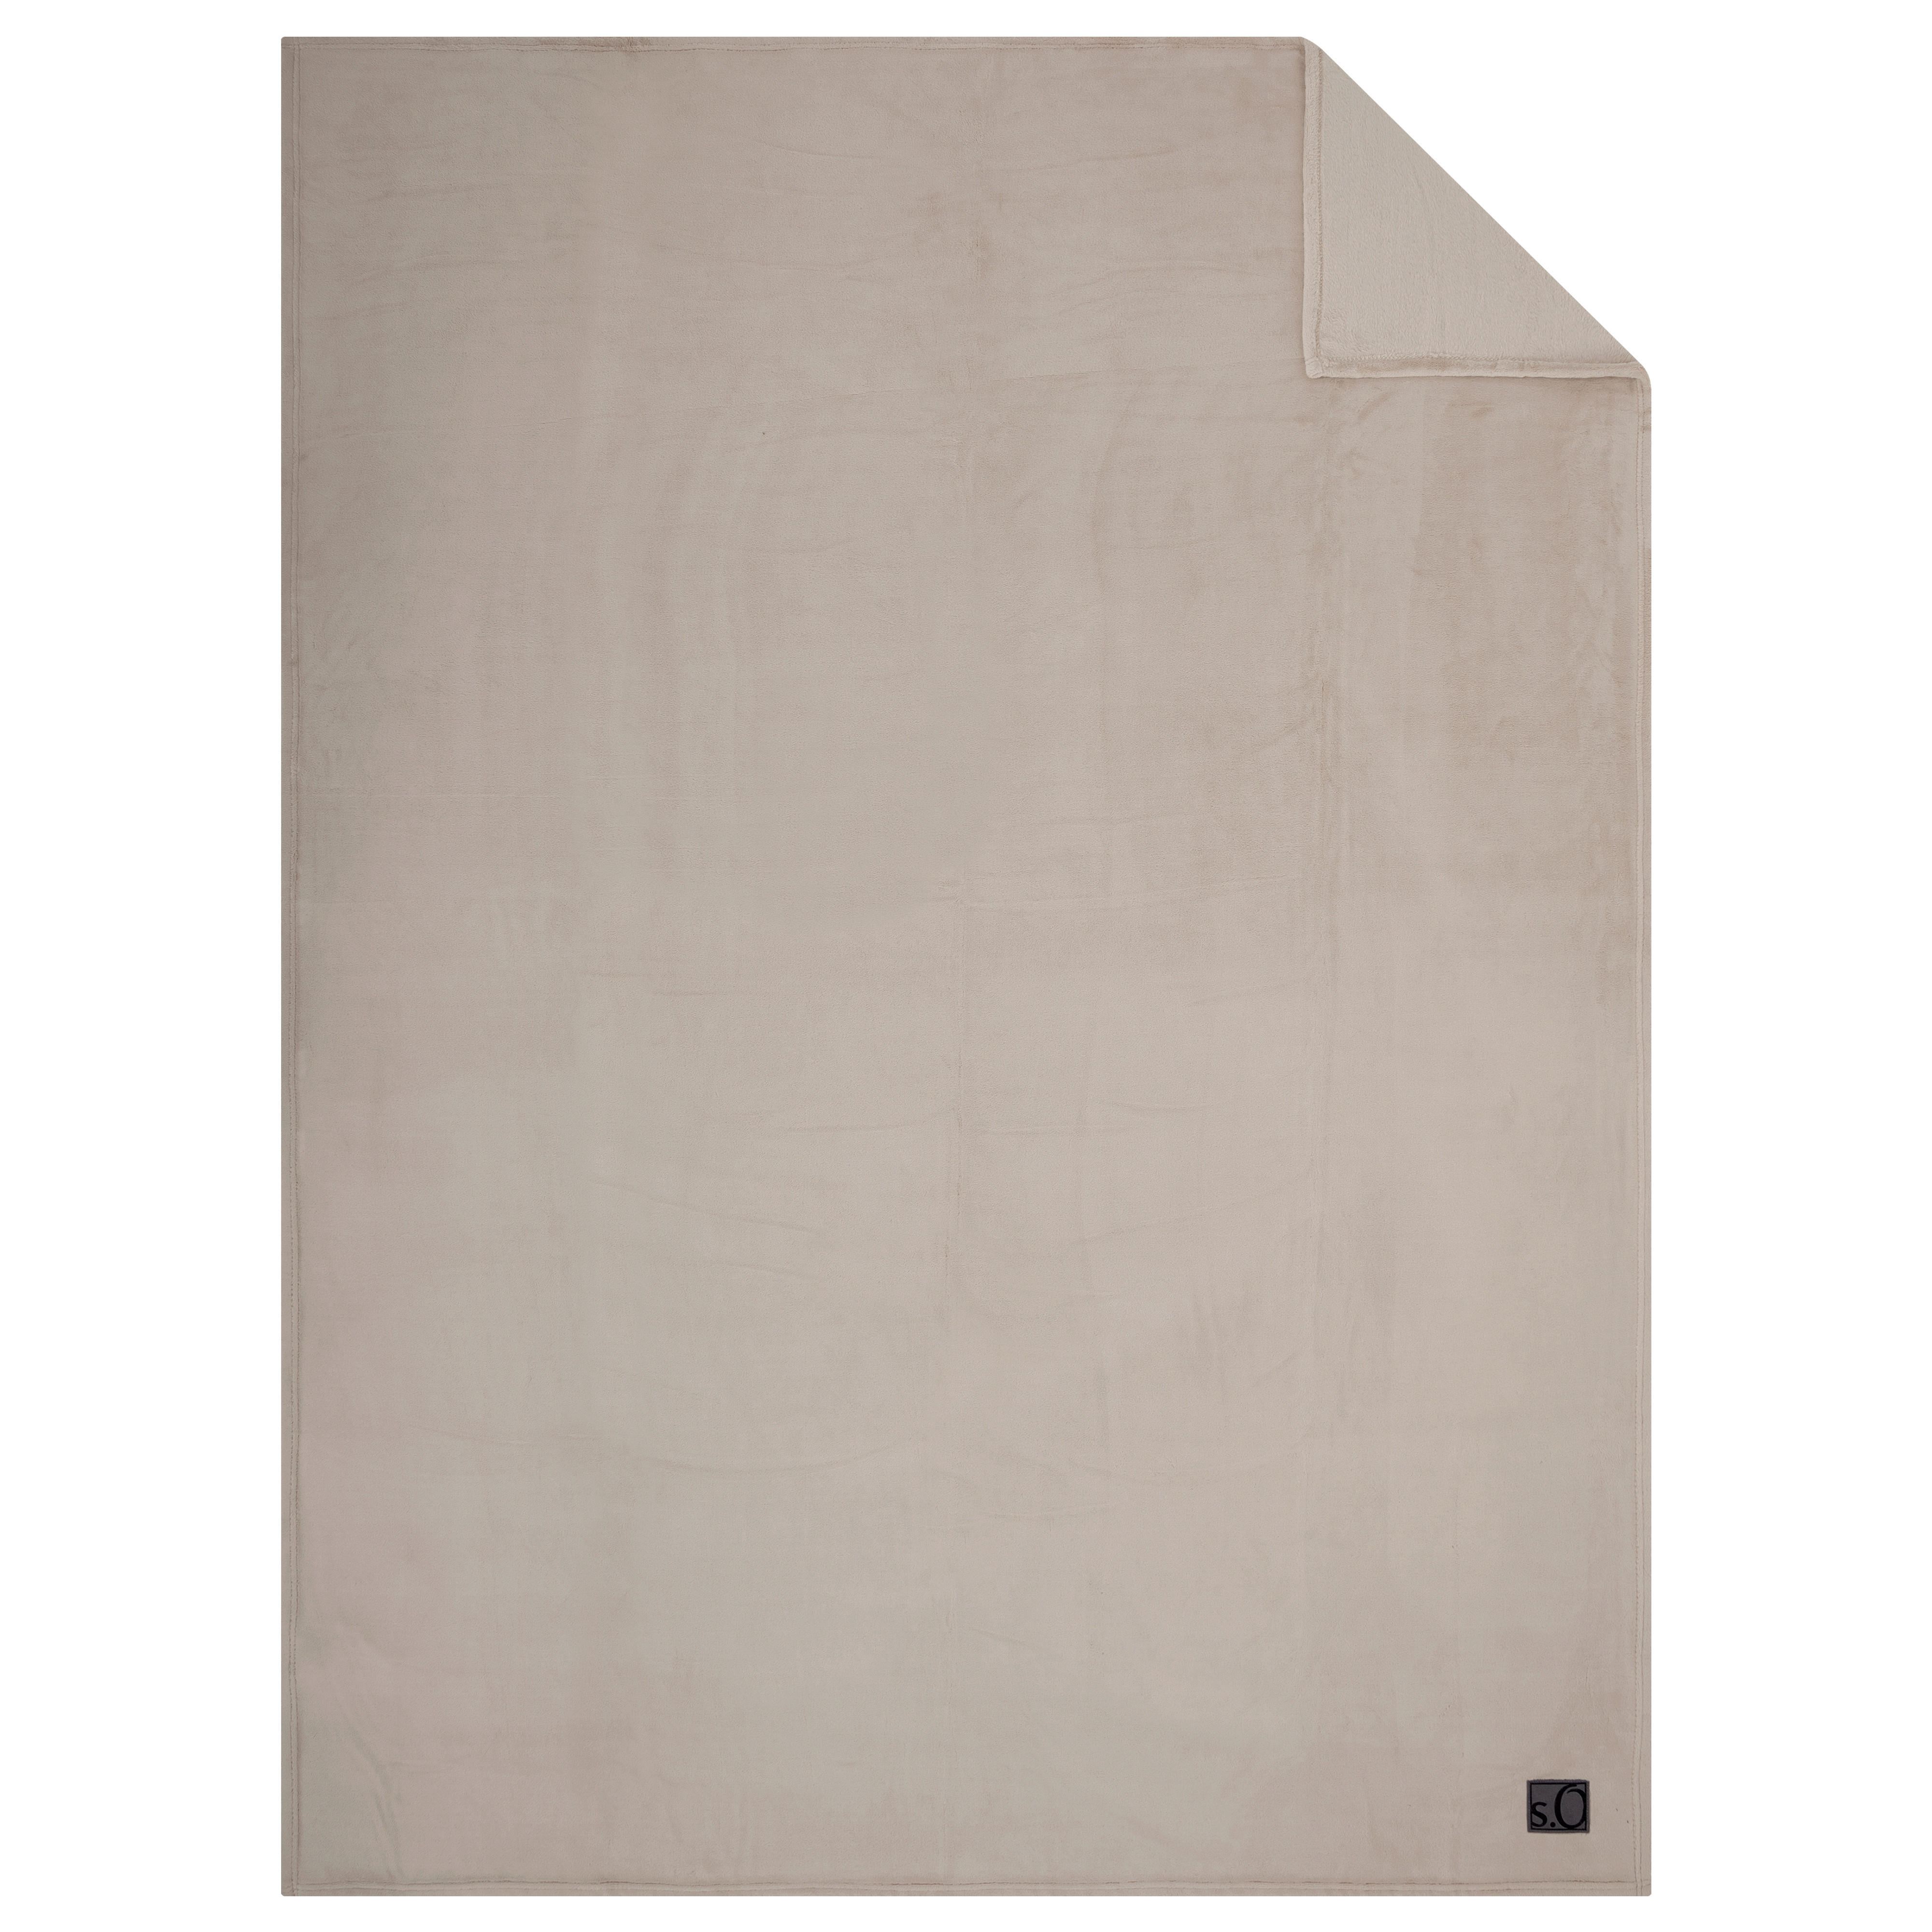 WOHNDECKE 220/240 cm  - Sandfarben, Basics, Textil (220/240cm) - S. Oliver